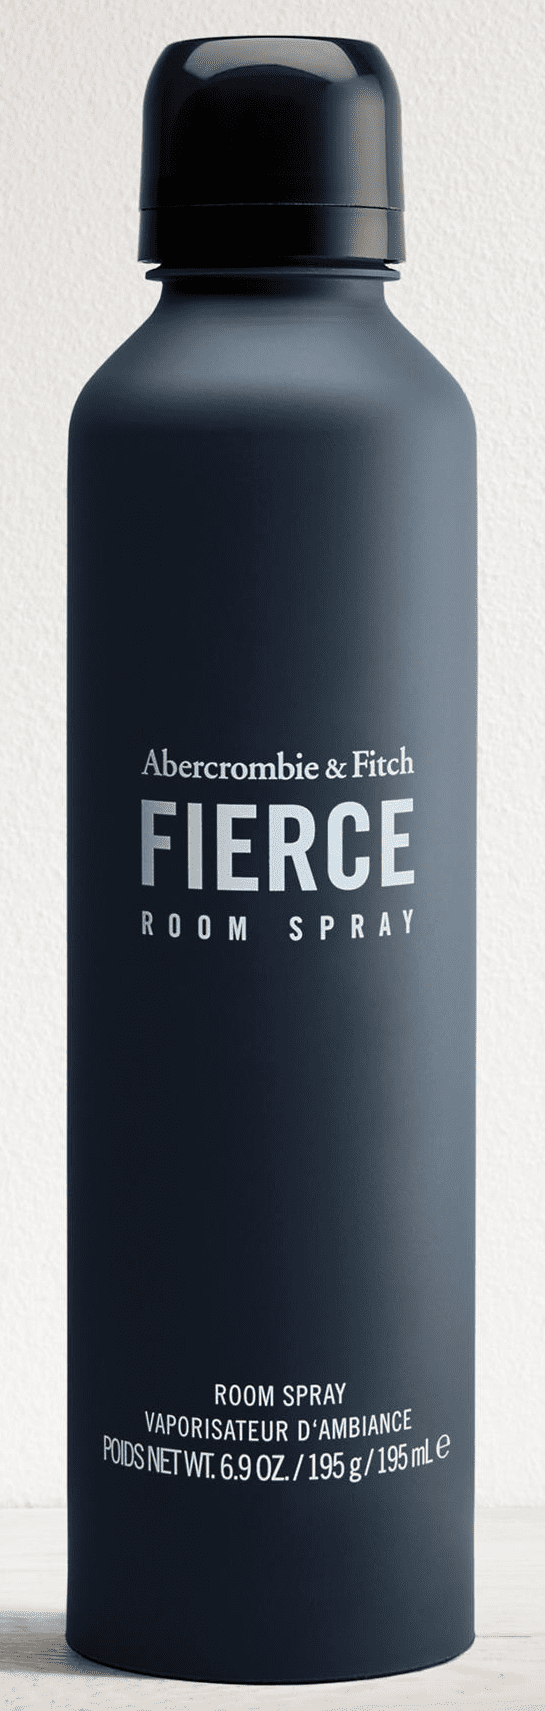 abercrombie & fitch fierce room spray